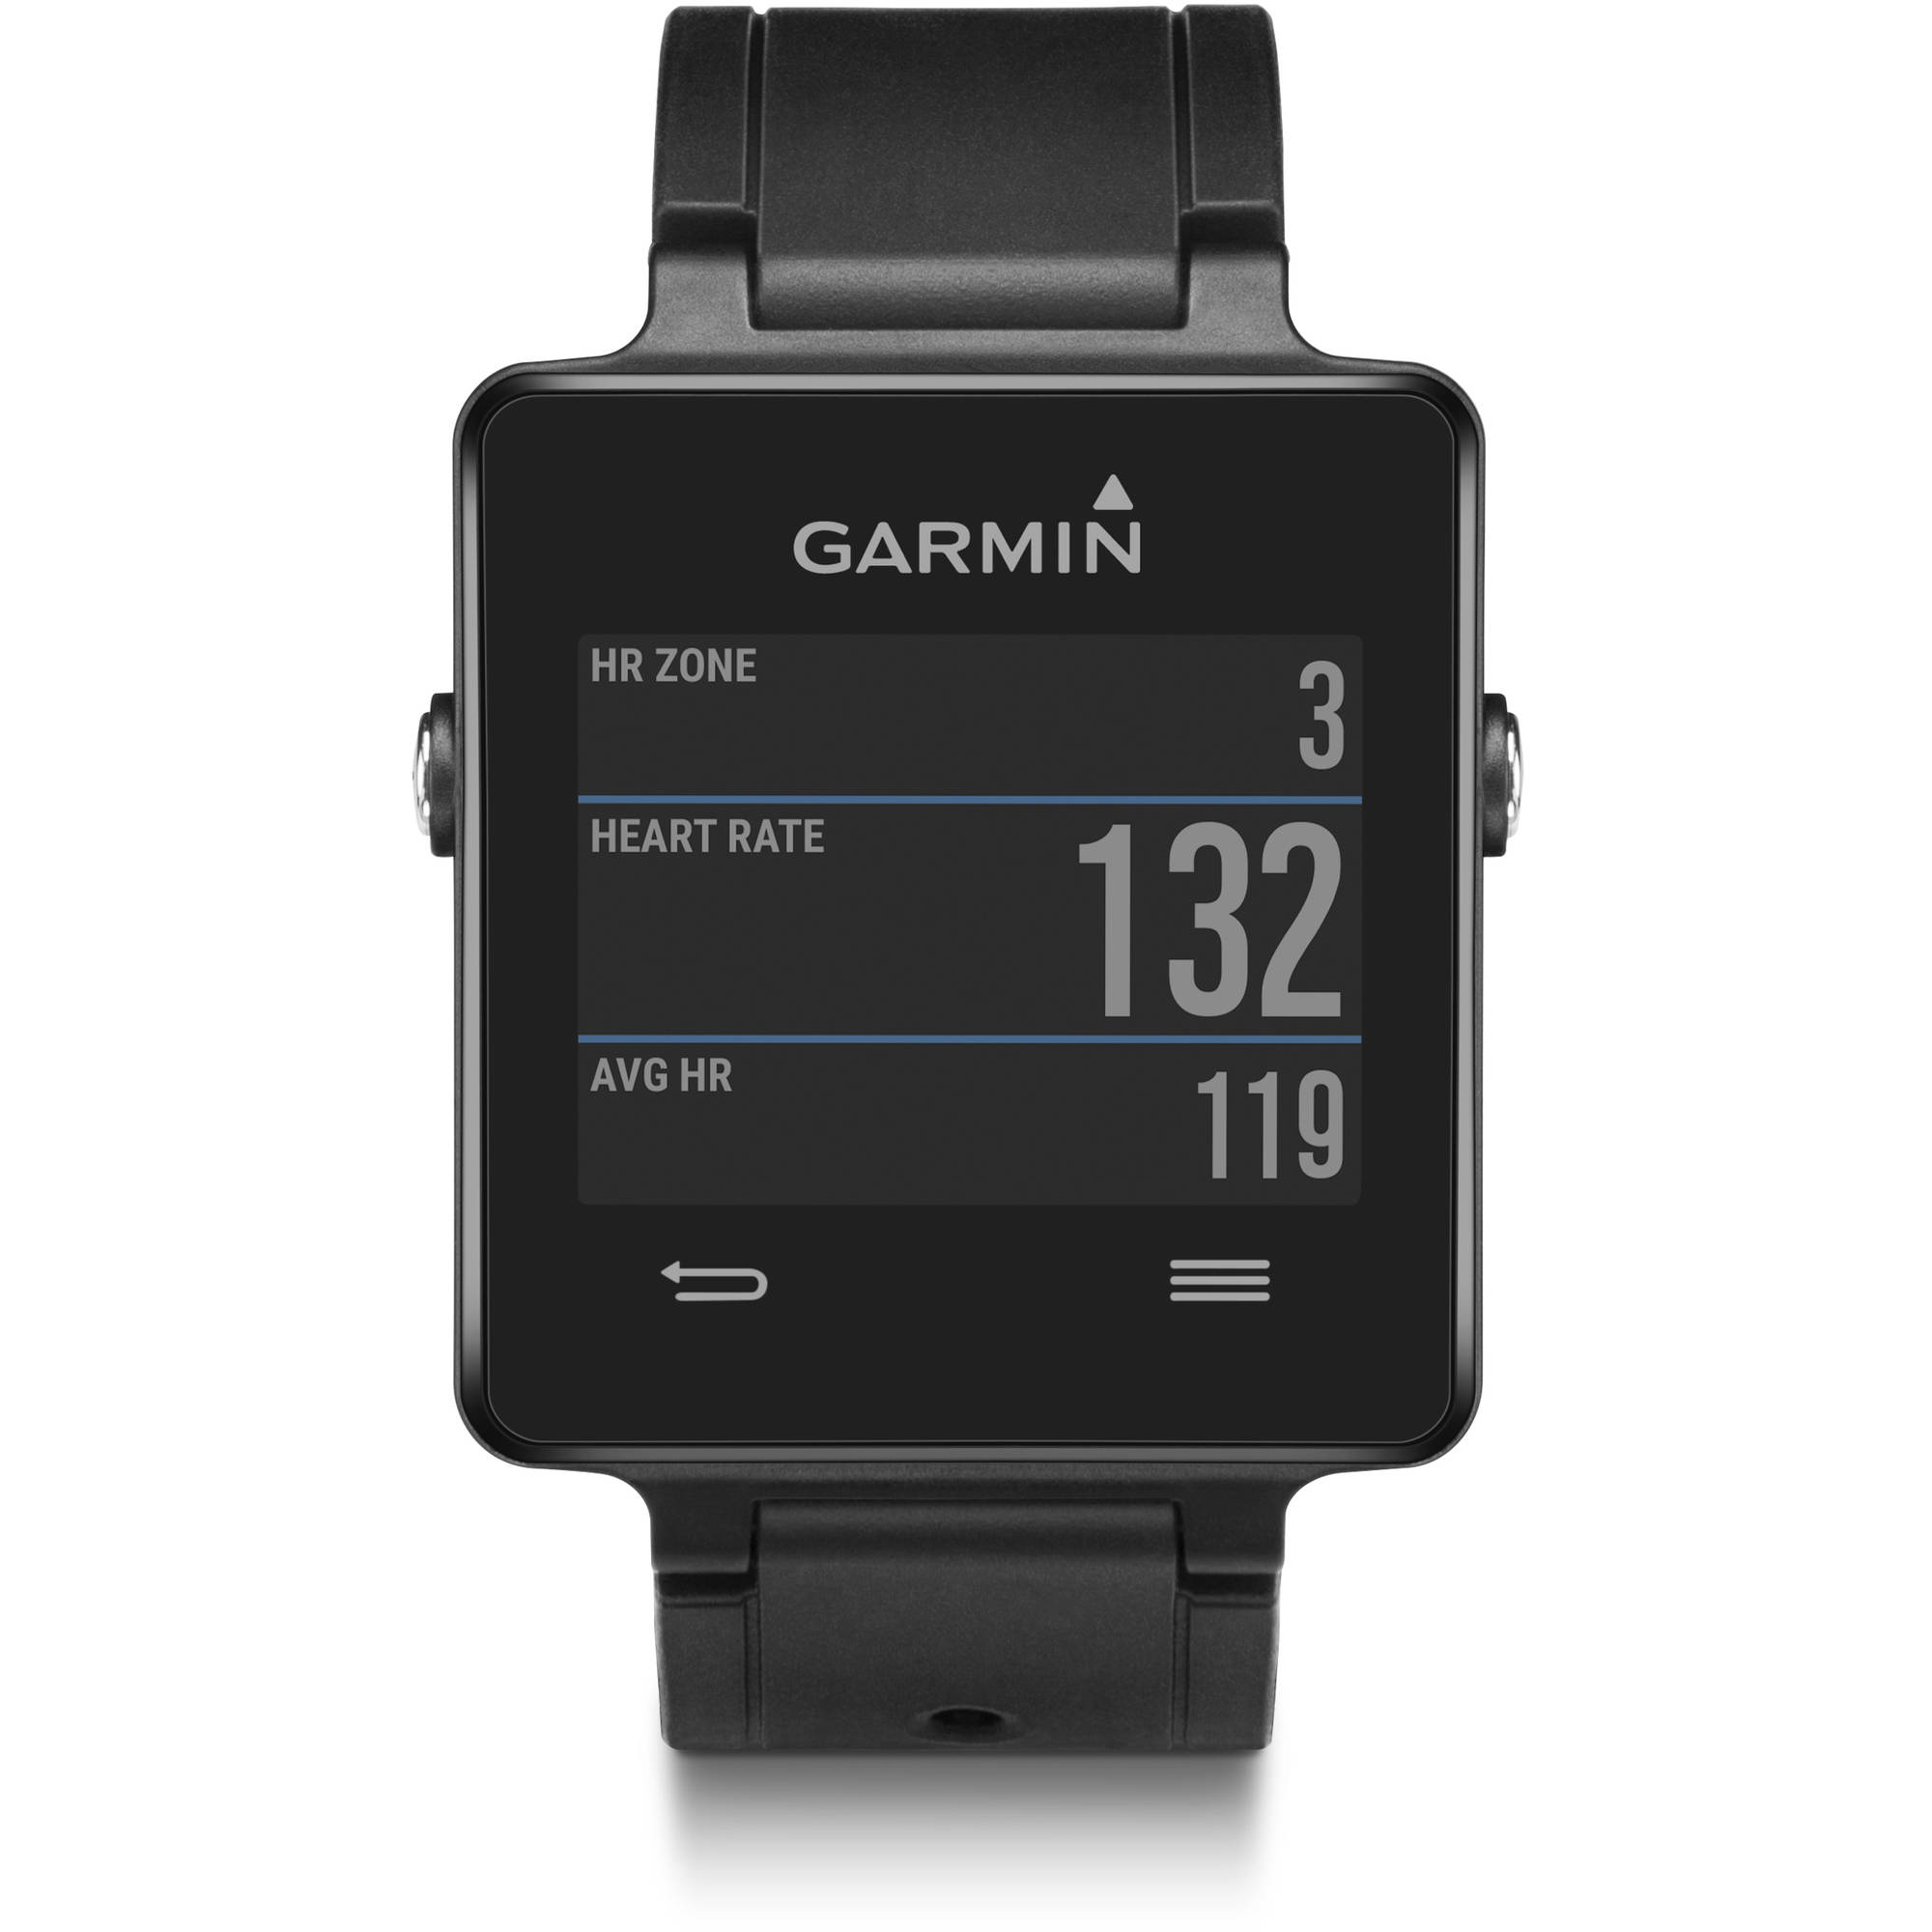 Garmin Vivoactive Smartwatch GPS / Activity Tracker / Pedometer / Sleep Monitor with Phone Notifications, Black (fits wrists 5.35-9.25") - image 2 of 3